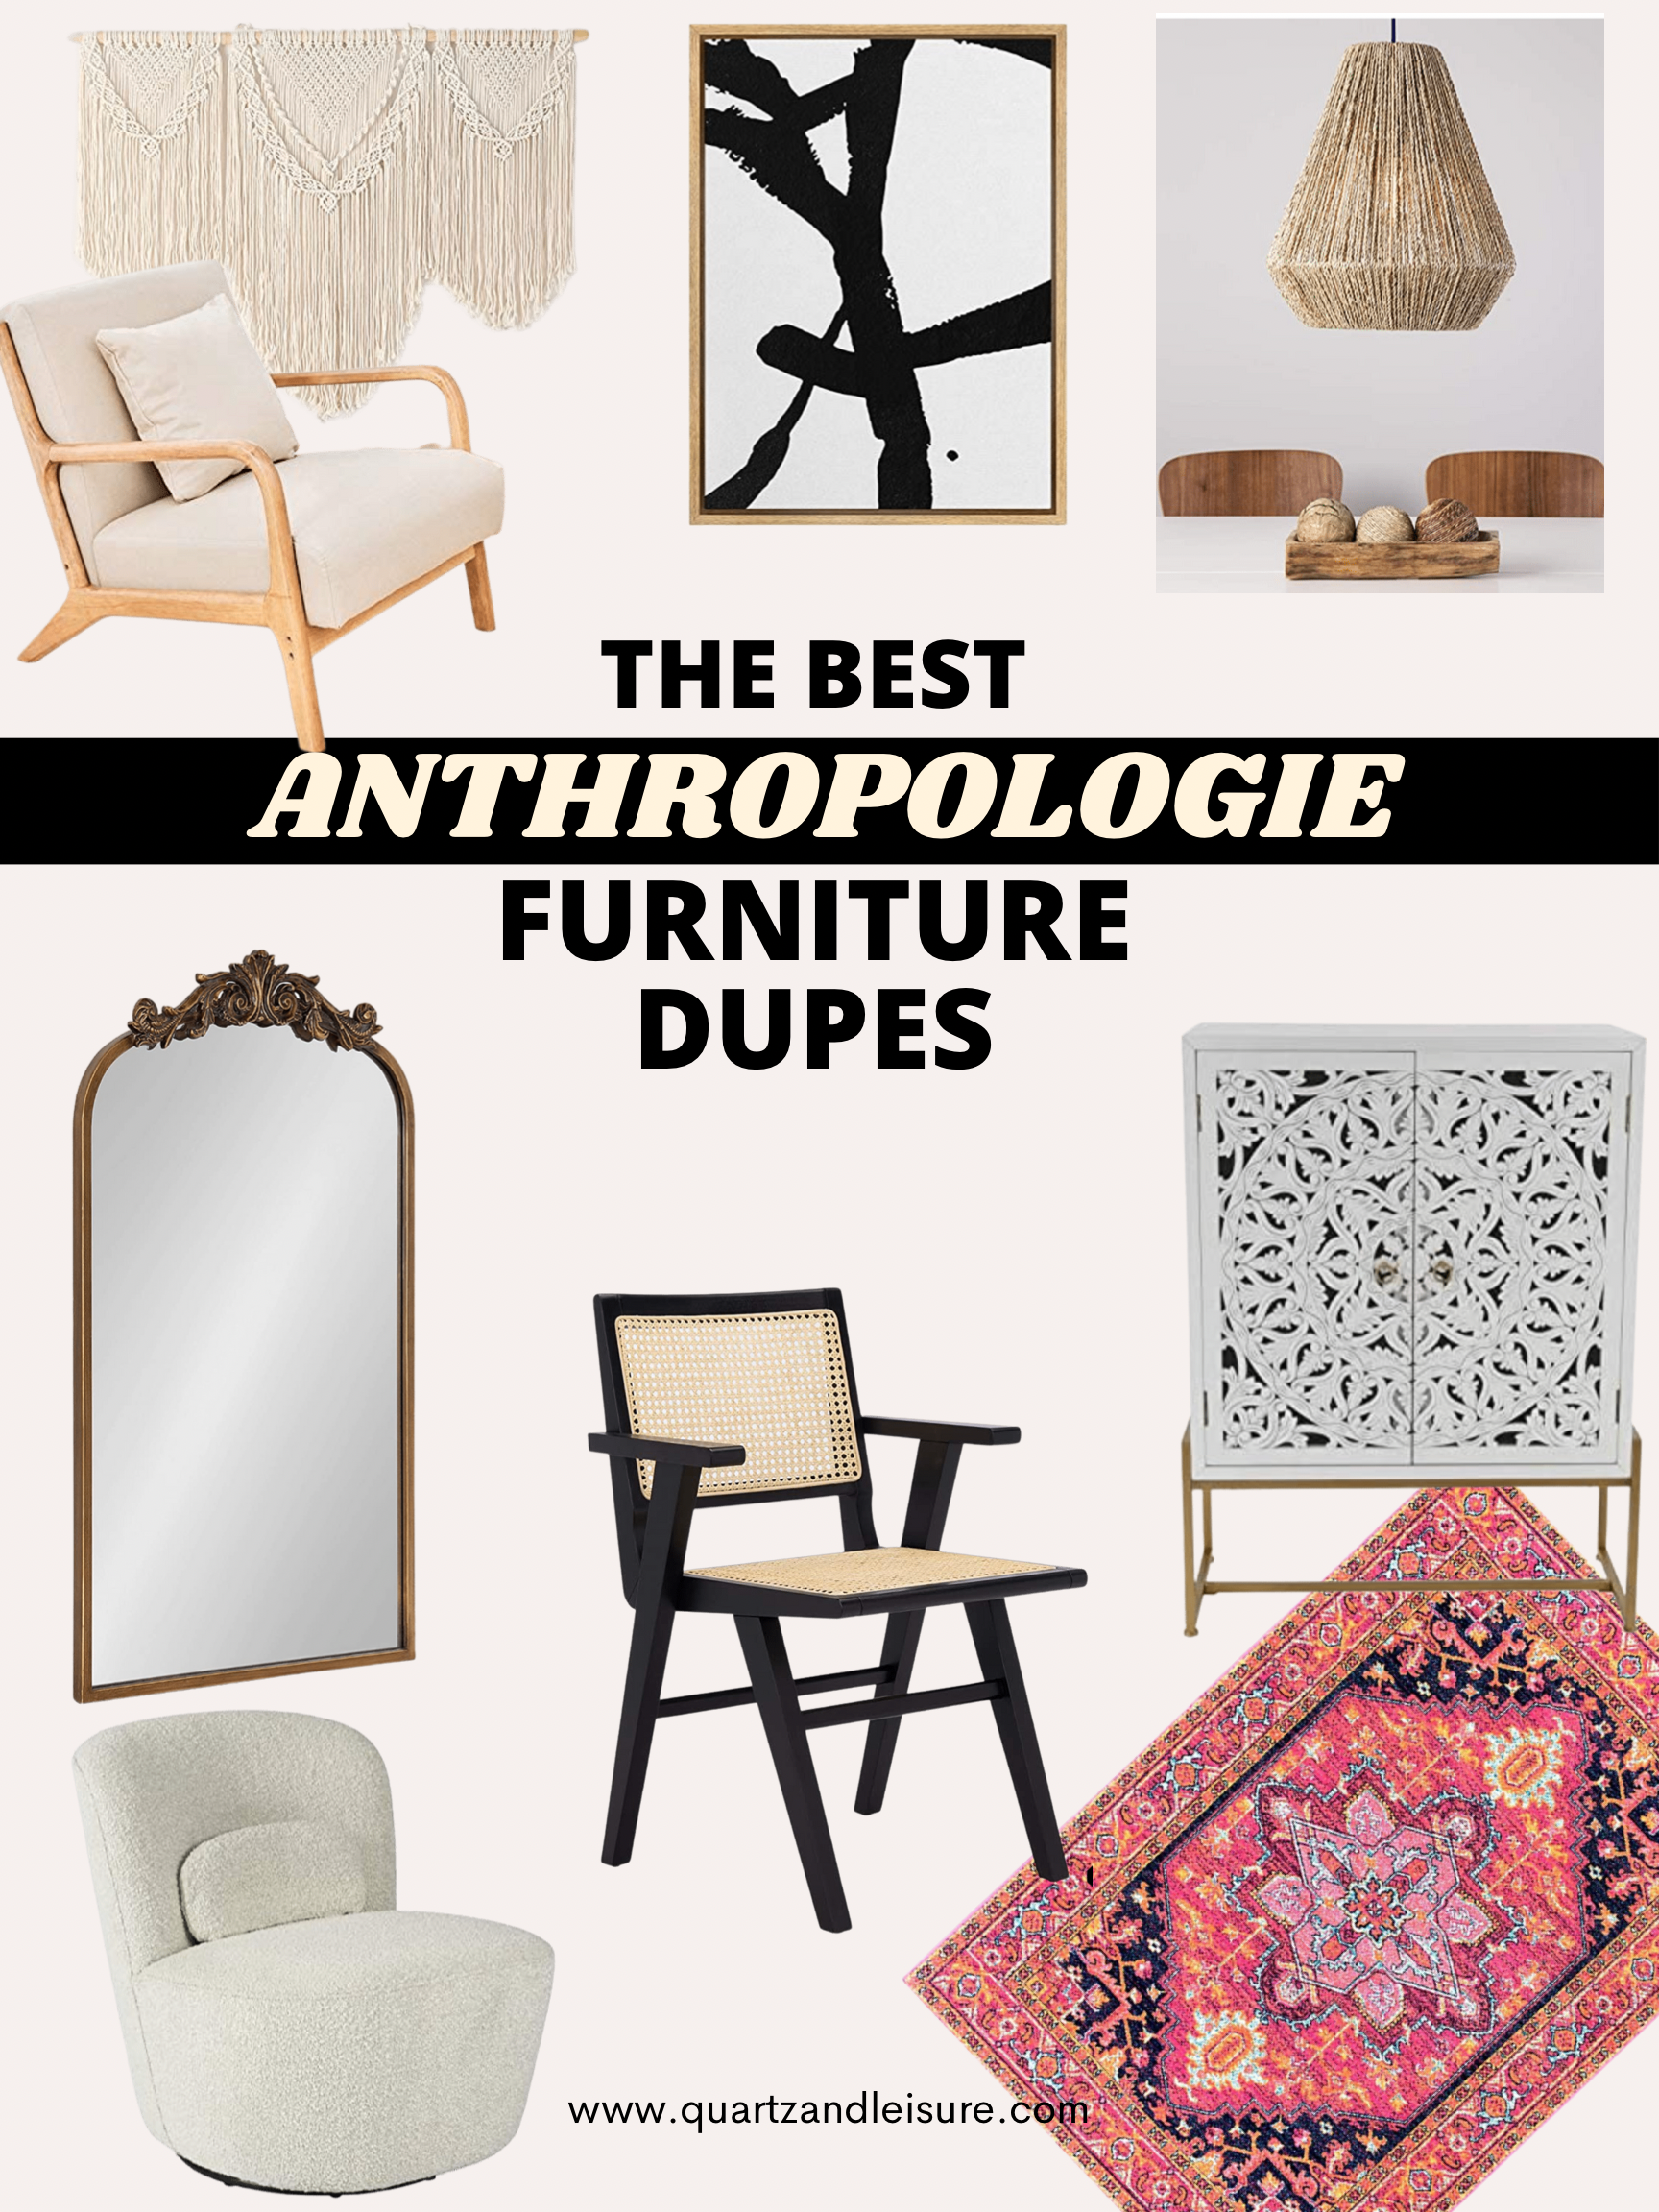 Anthropologie furniture Dupes